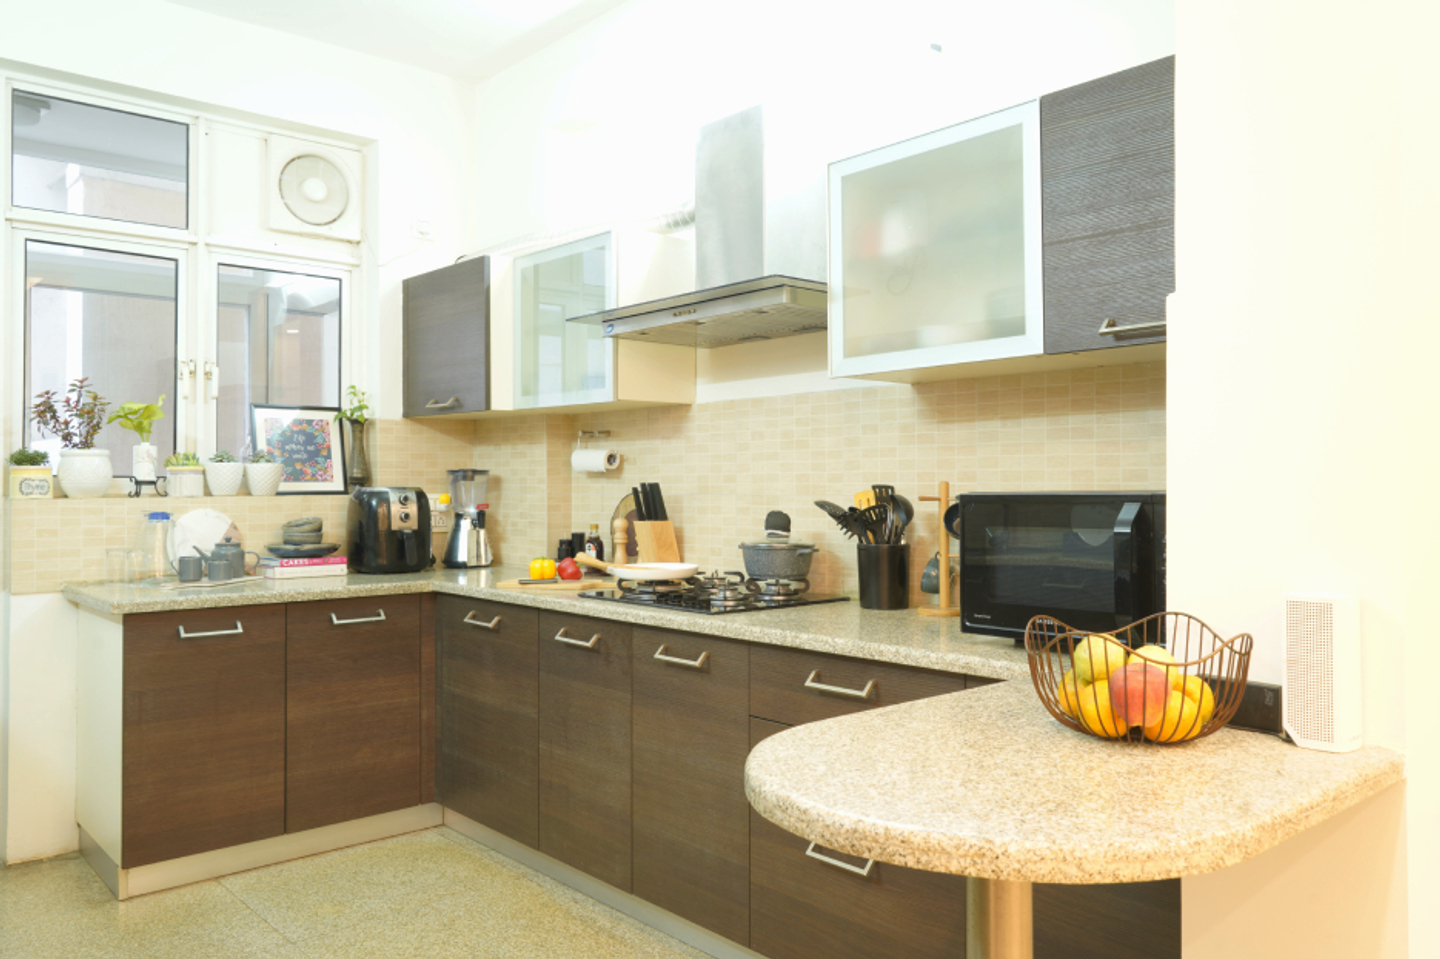 Classic Kitchen Interior Design - Livspace